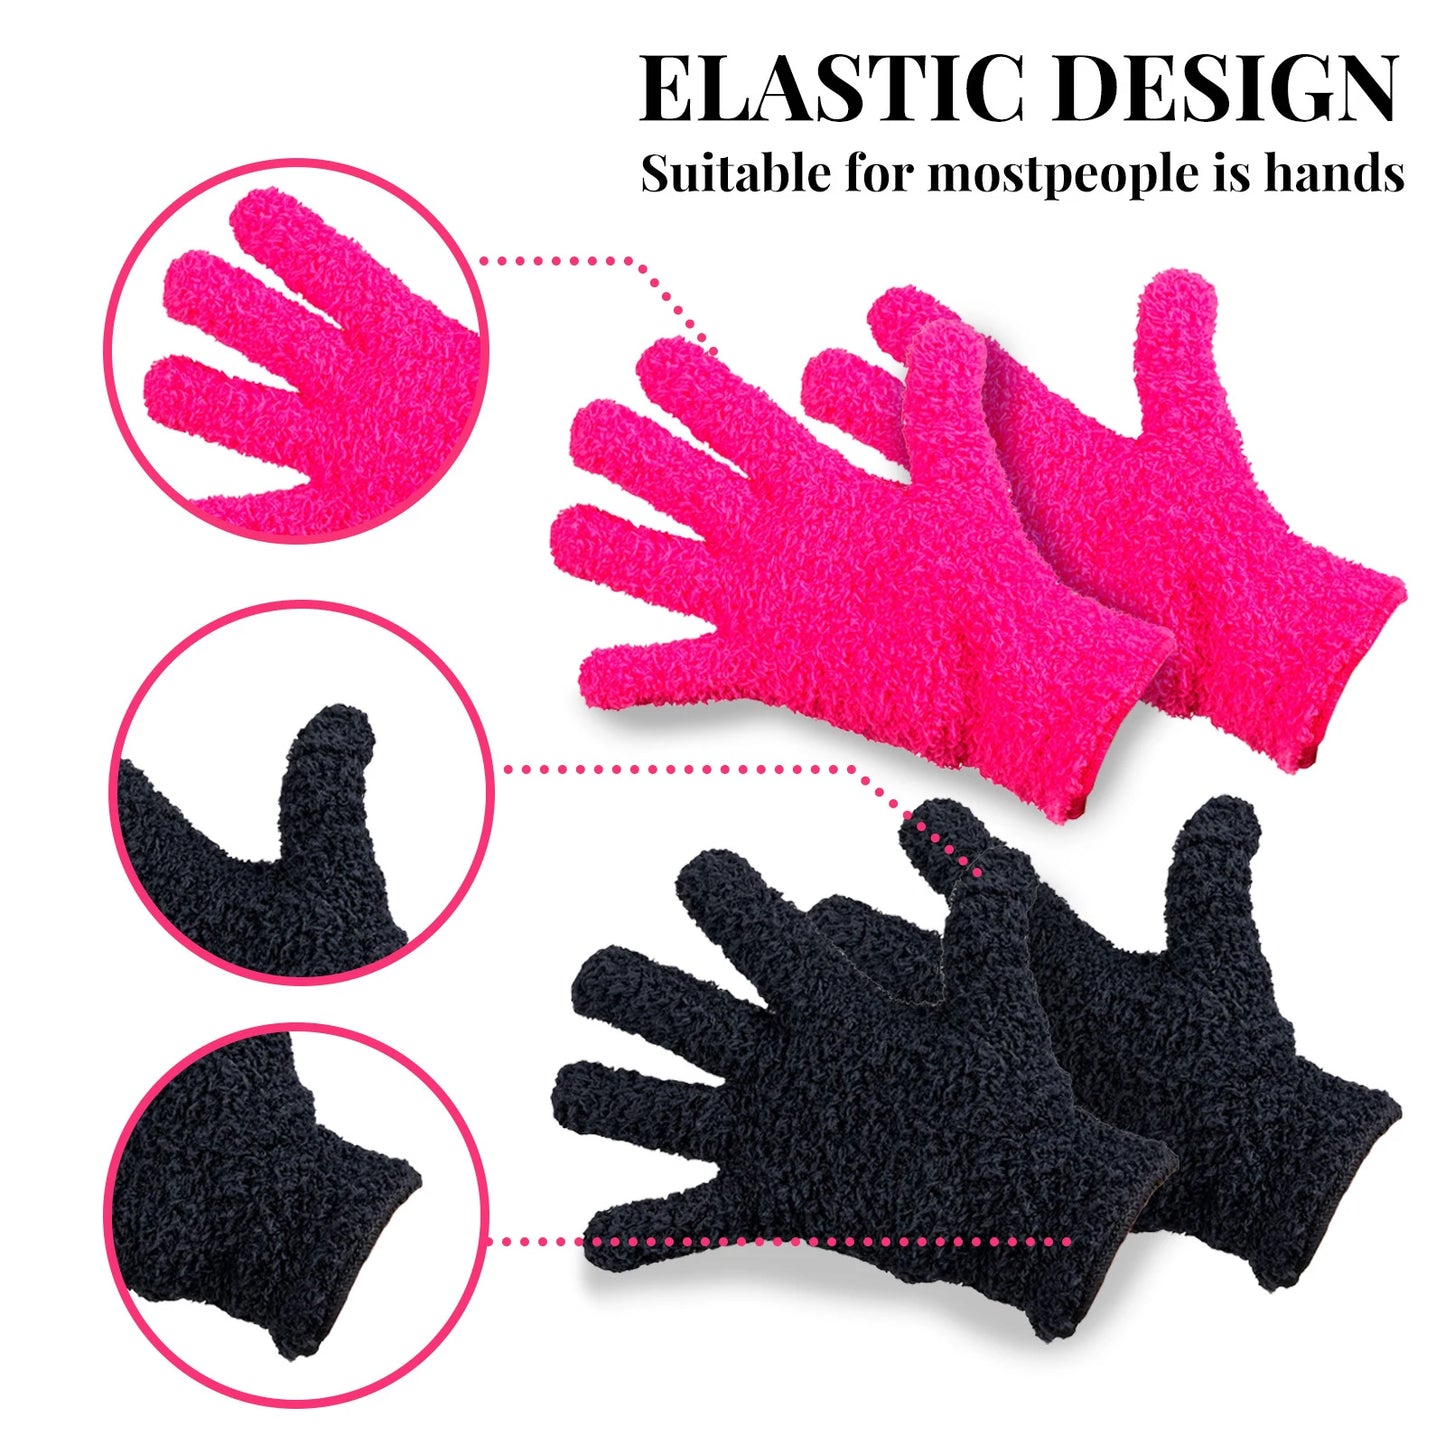 Heat Resistant Nylon Bleach Gloves for Hair Straightening, Curling - Hairdressing Finger Glove Salon Styling Tools